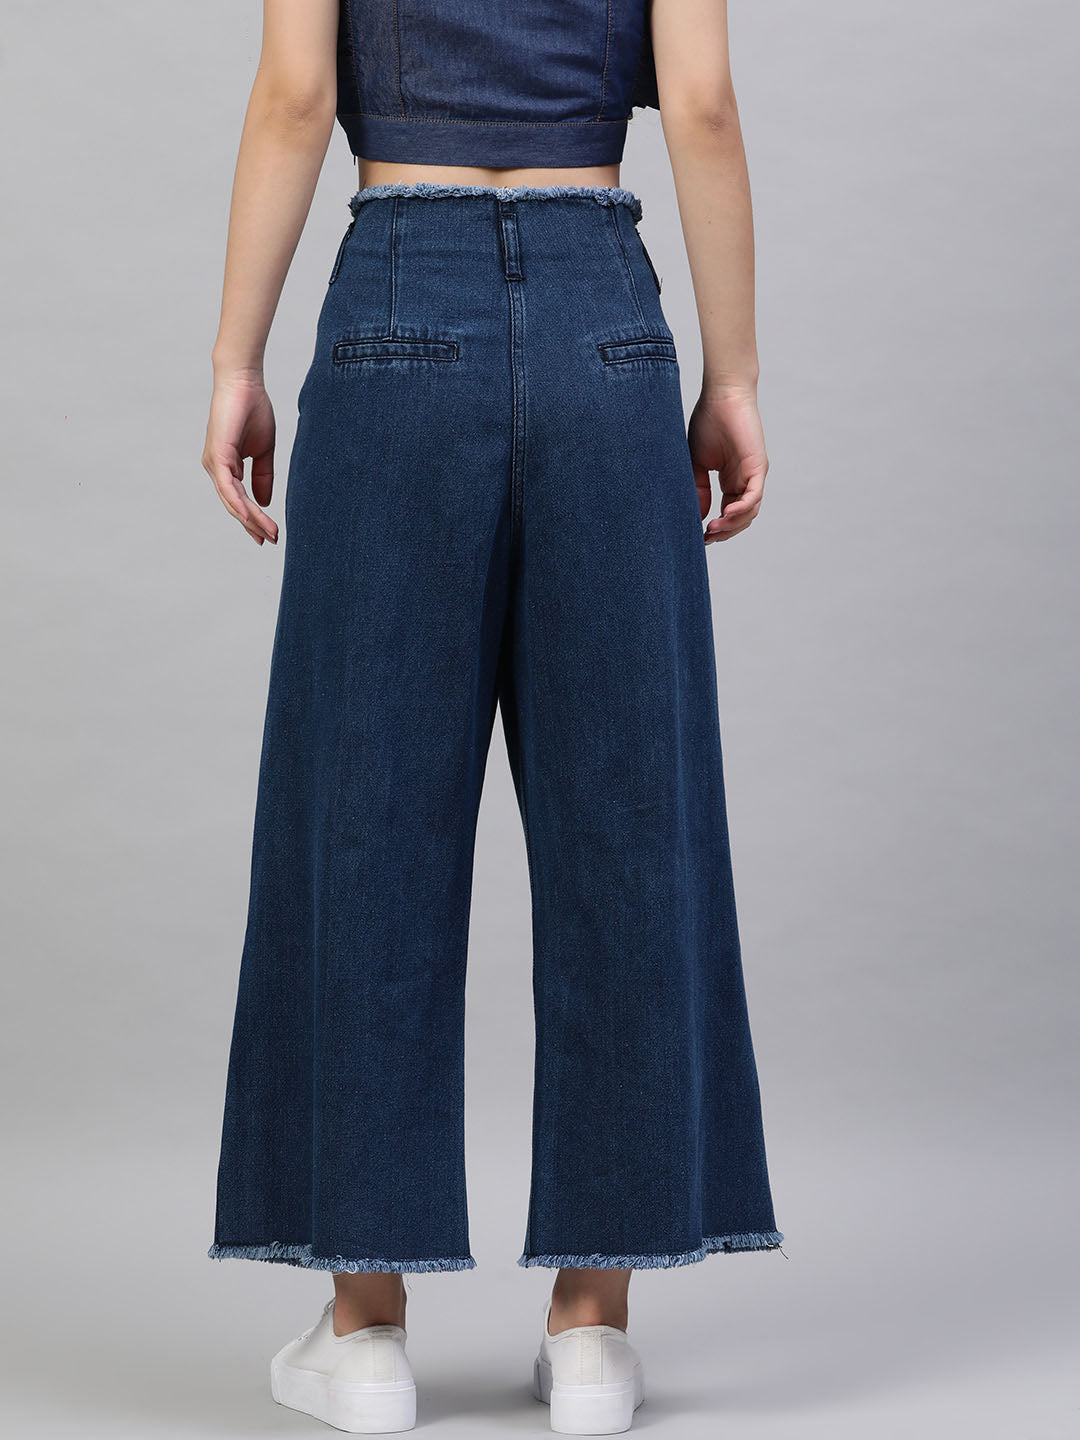 Buy MMWORM Boys Ripped Denim Jeans Pants Elastic Waist Trousers for Baby  Boys Girls 34 Years  Dark Blue at Amazonin